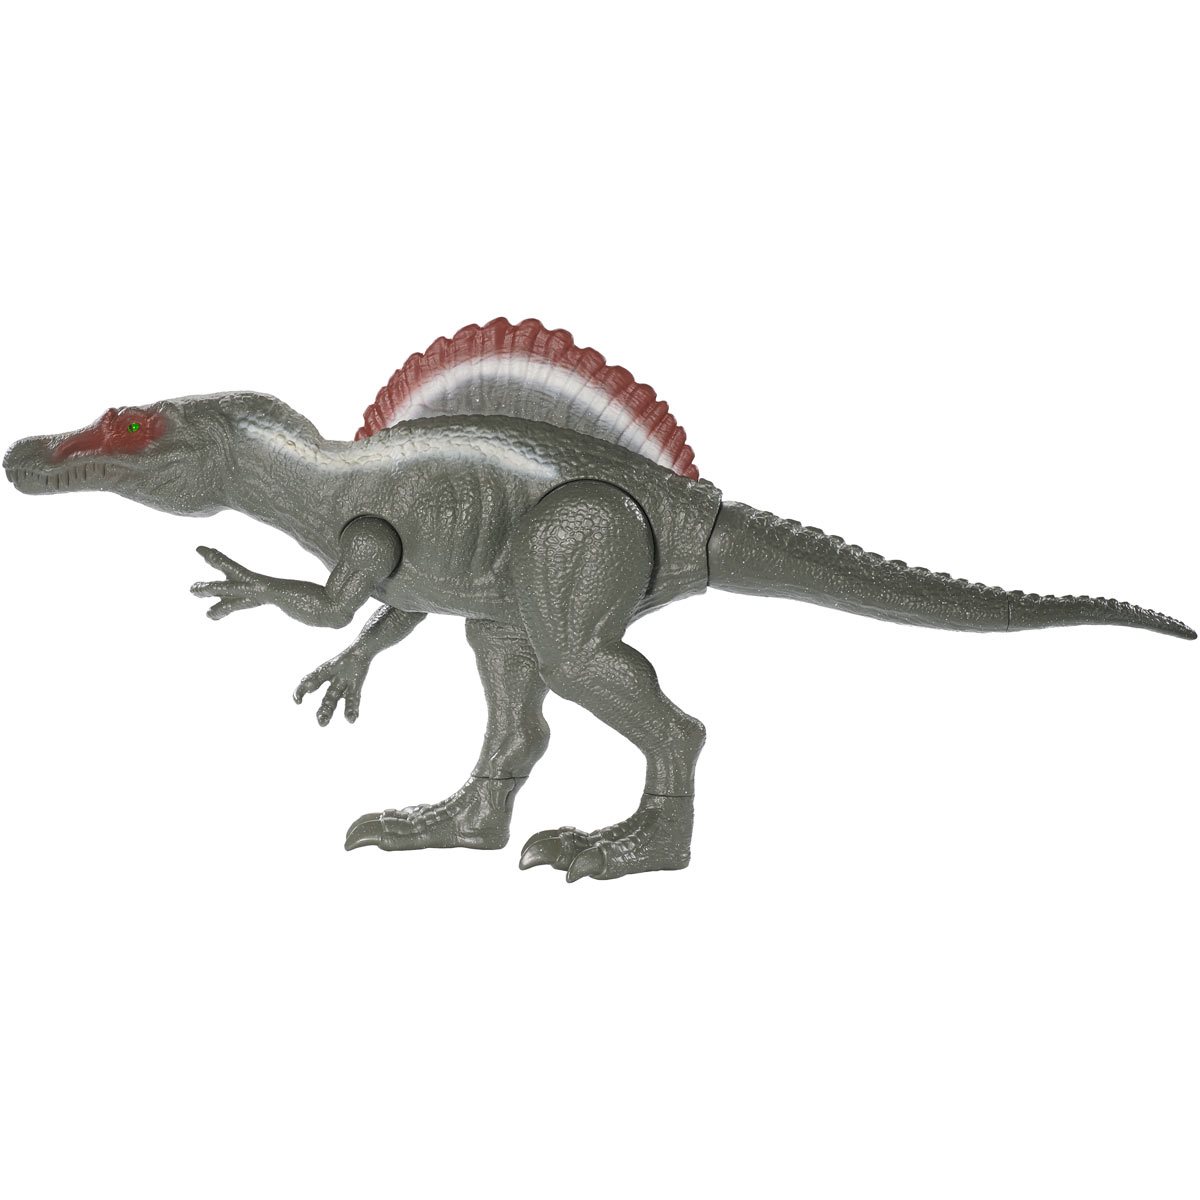 Details about   Jurassic World Spinosaurus Basic 12-inch Figure 